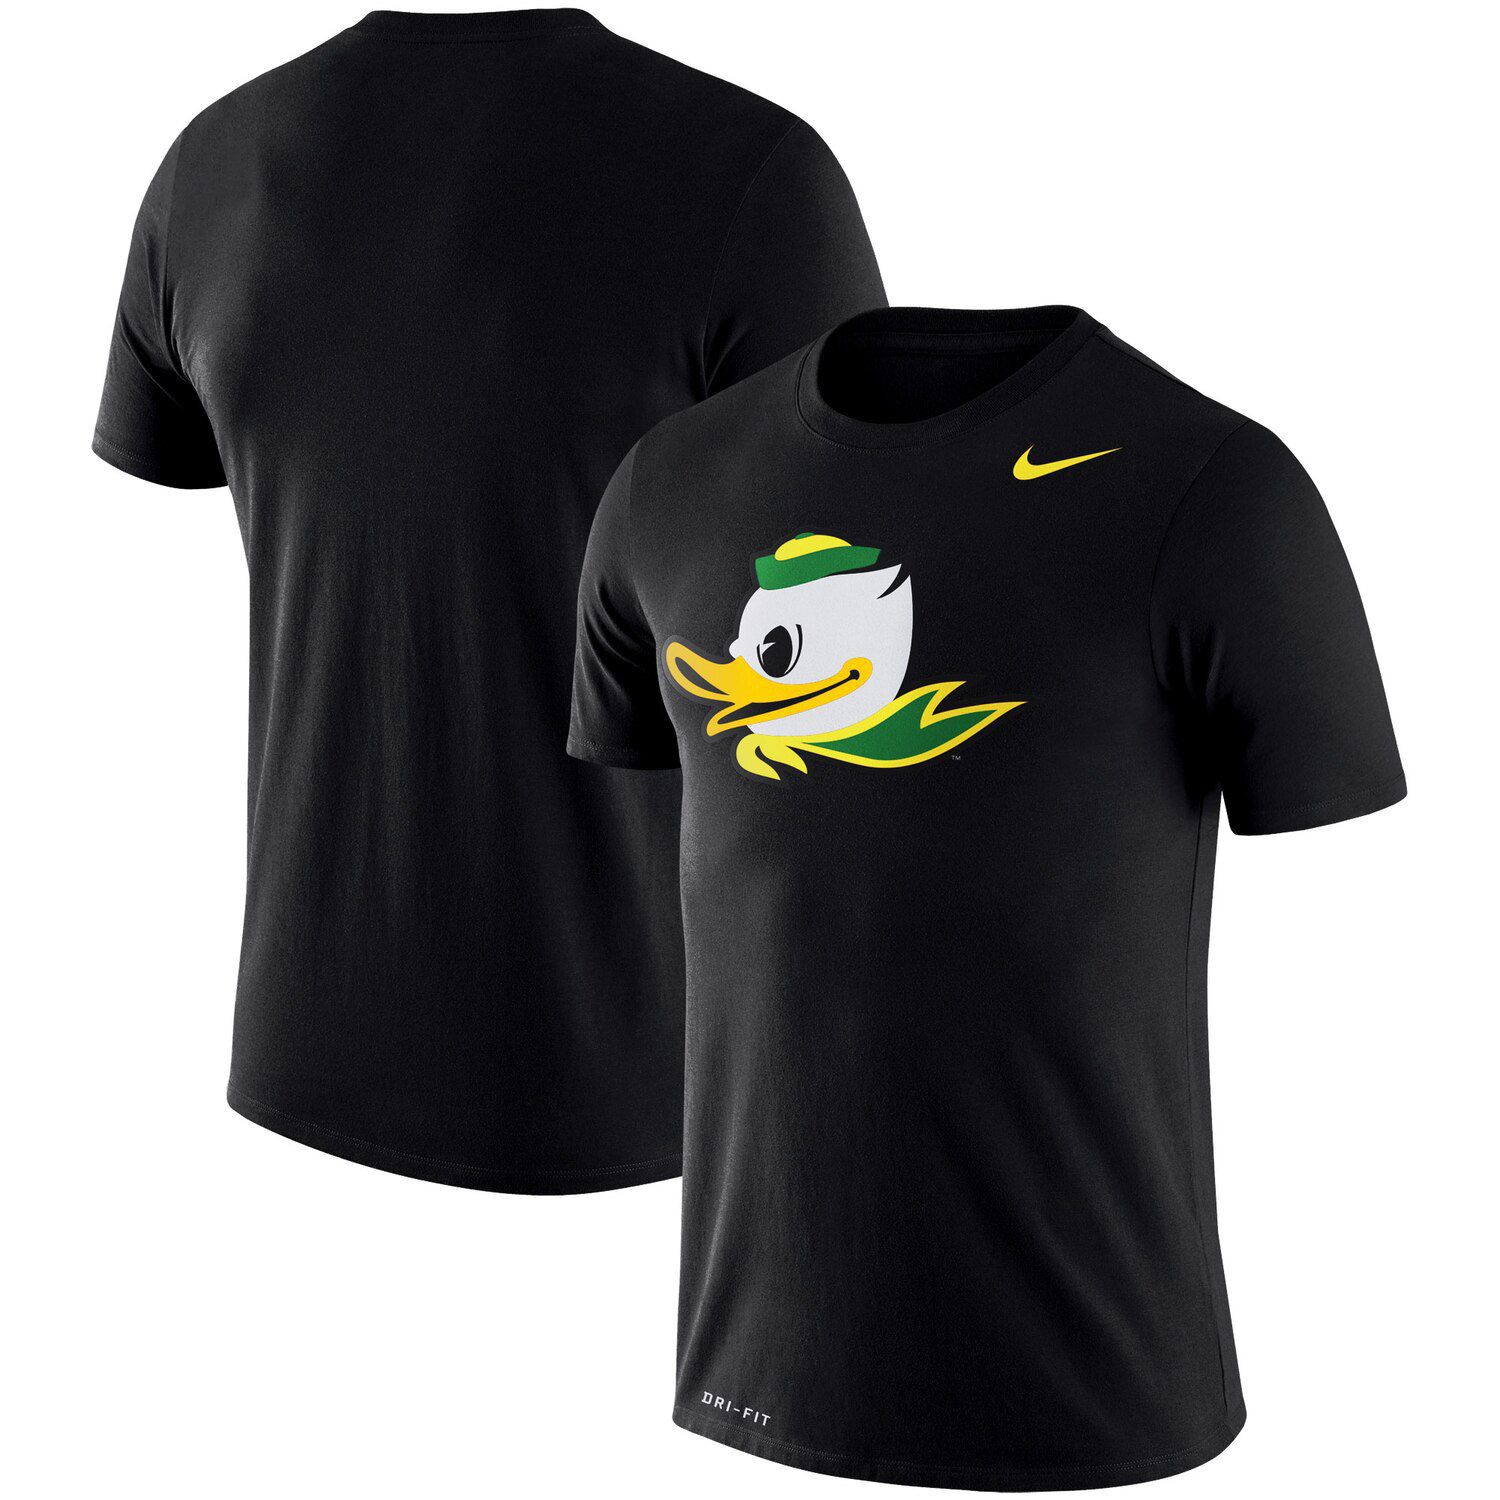 Men's Nike Black Oregon Ducks Legend 